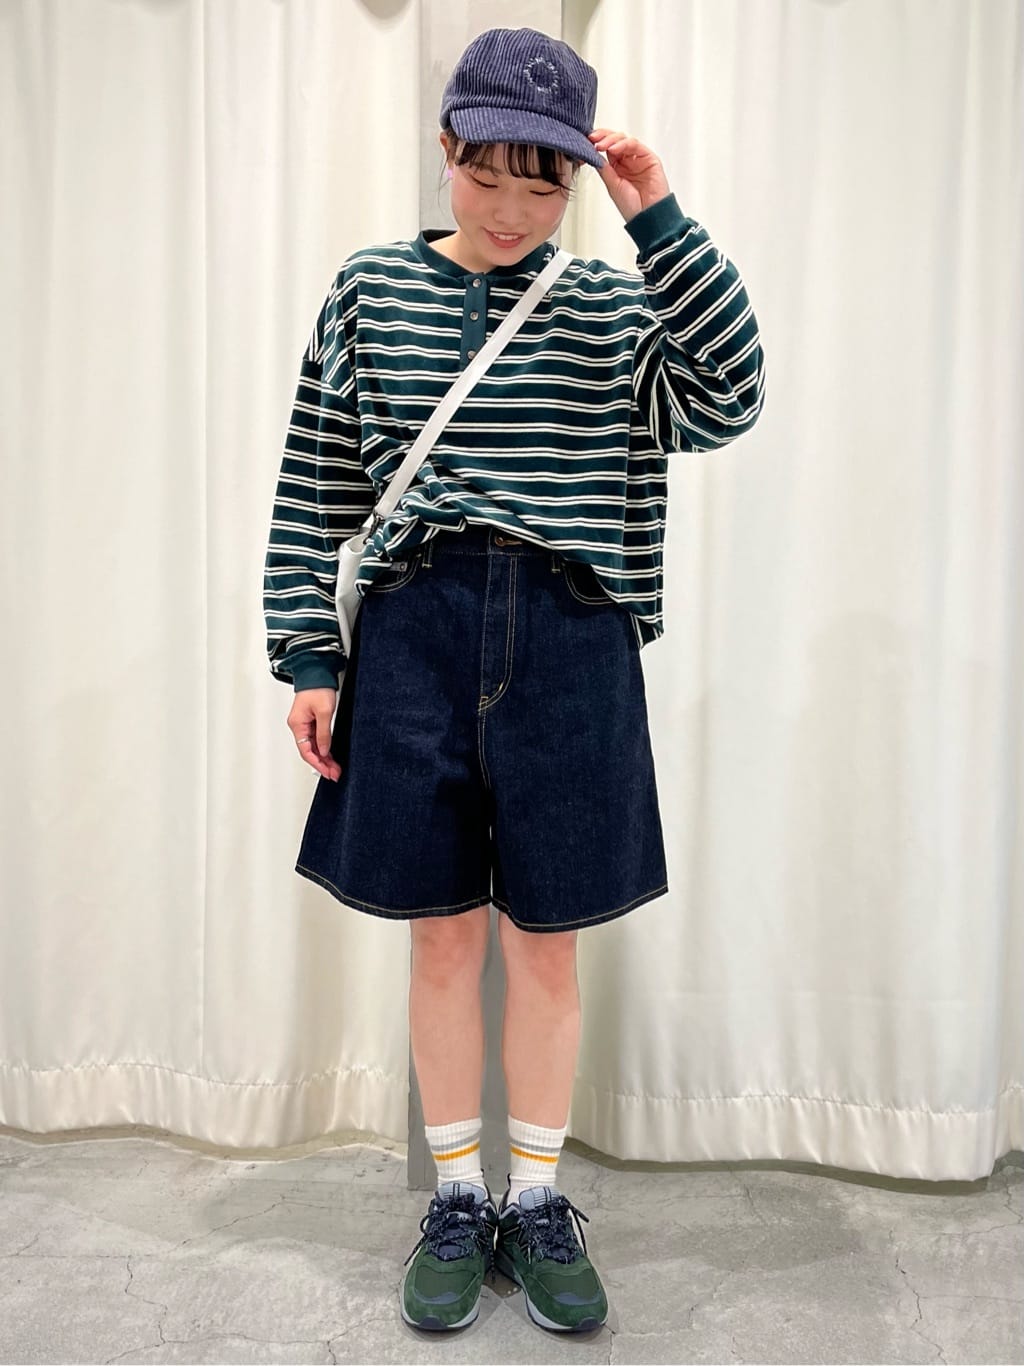 Dot and Stripes CHILD WOMAN CHILD WOMAN , PAR ICI 新宿ミロード 身長：153cm 2023.11.22